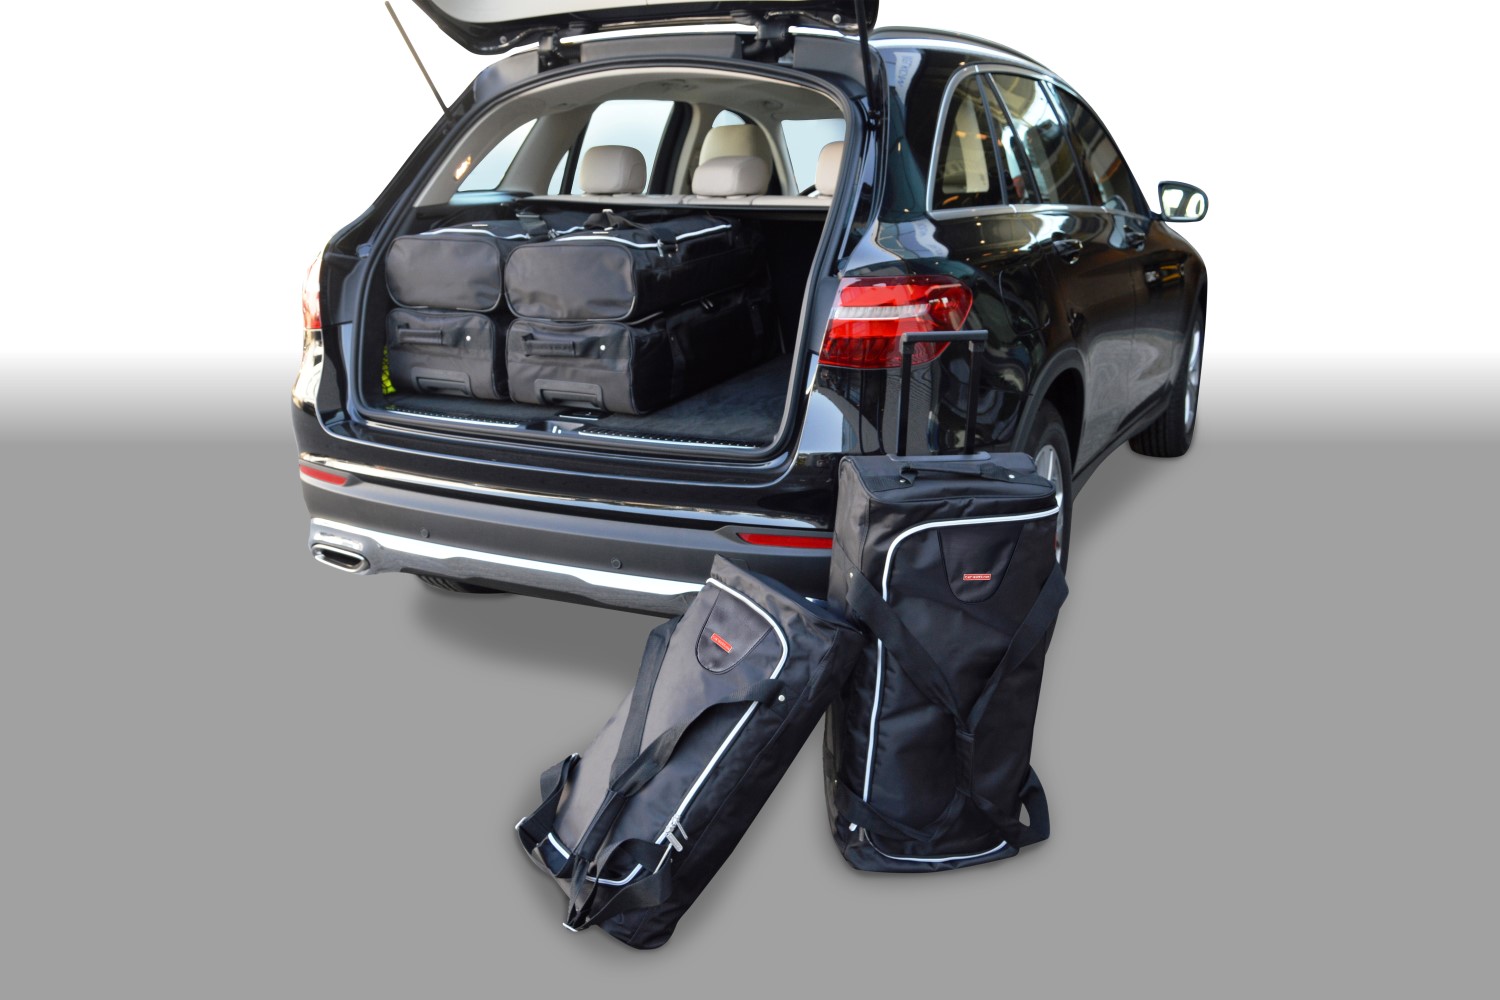 https://www.car-bags.com/images/stories/virtuemart/product/m21701s-mercedes-benz-glc-15-car-bags-1.jpg